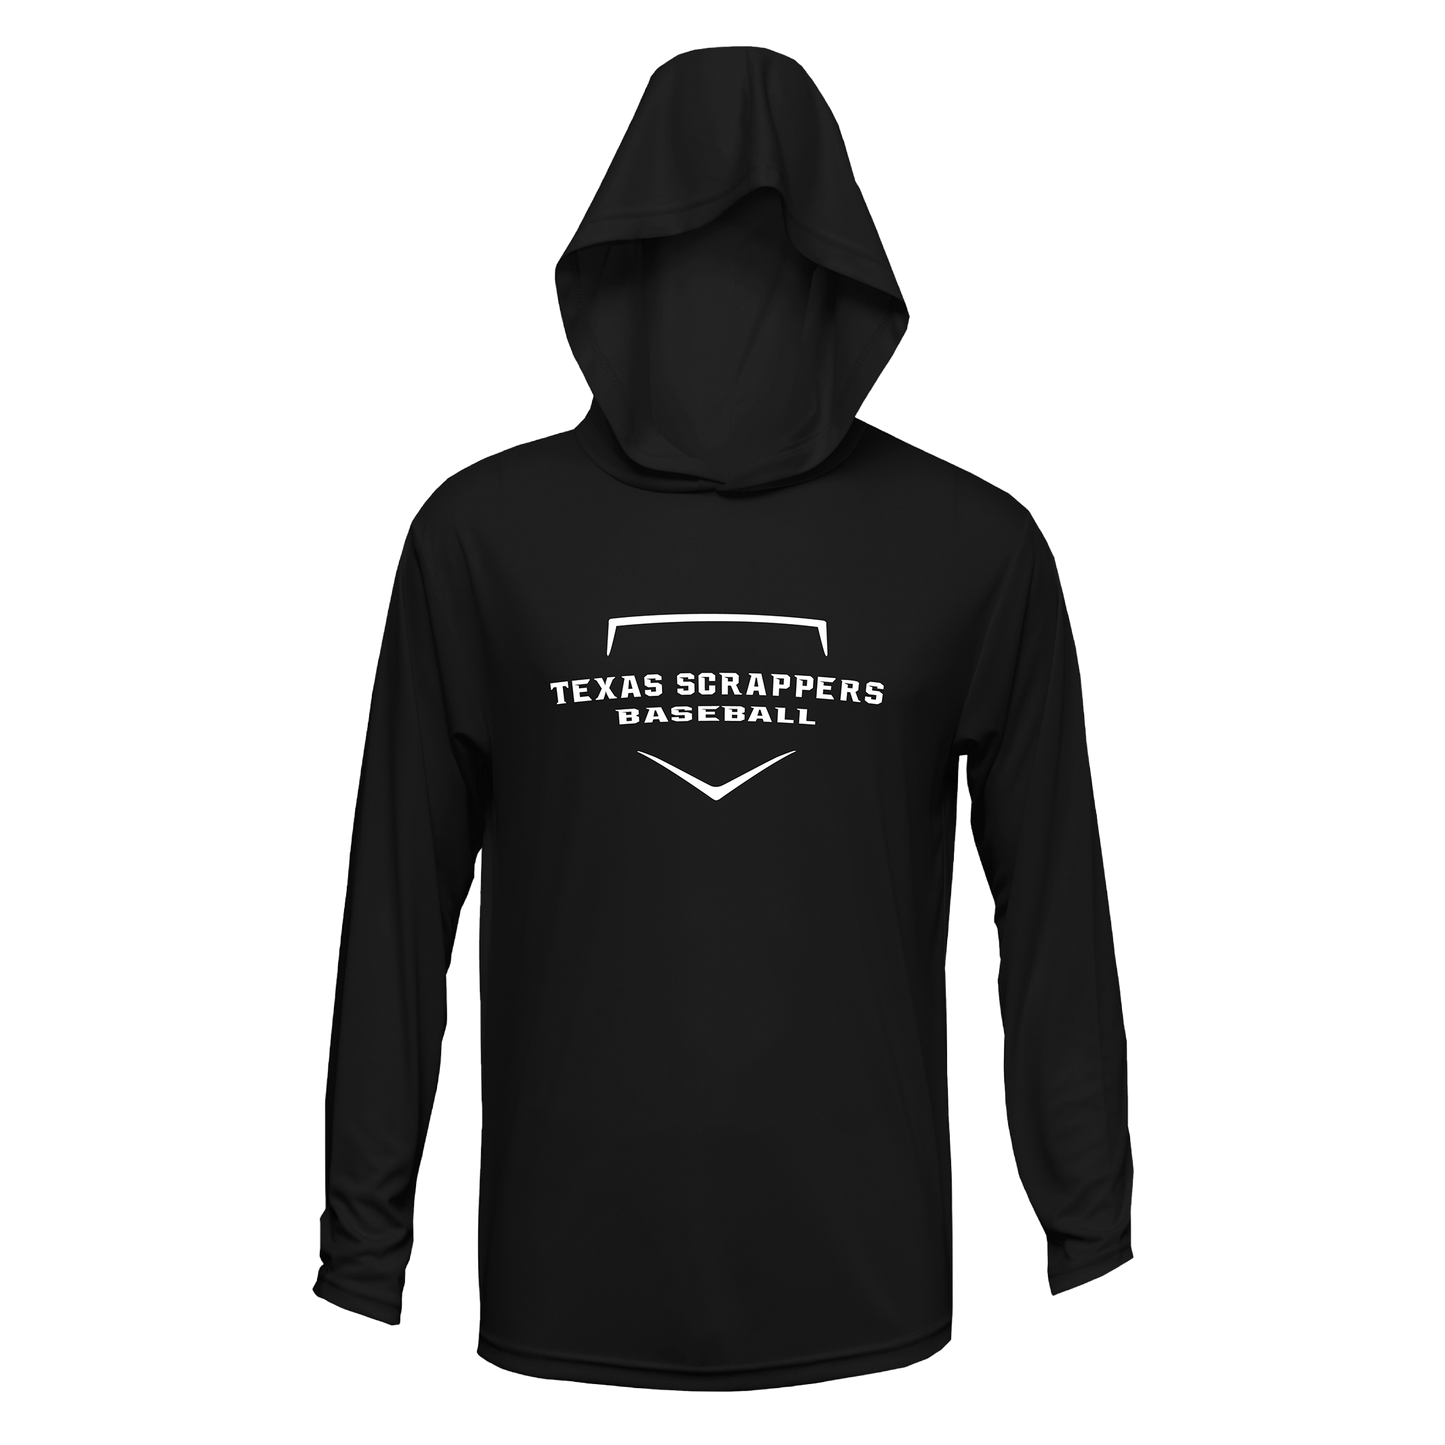 Youth Xtreme-Tek Black Long Sleeve Hoodie W/ White Logo